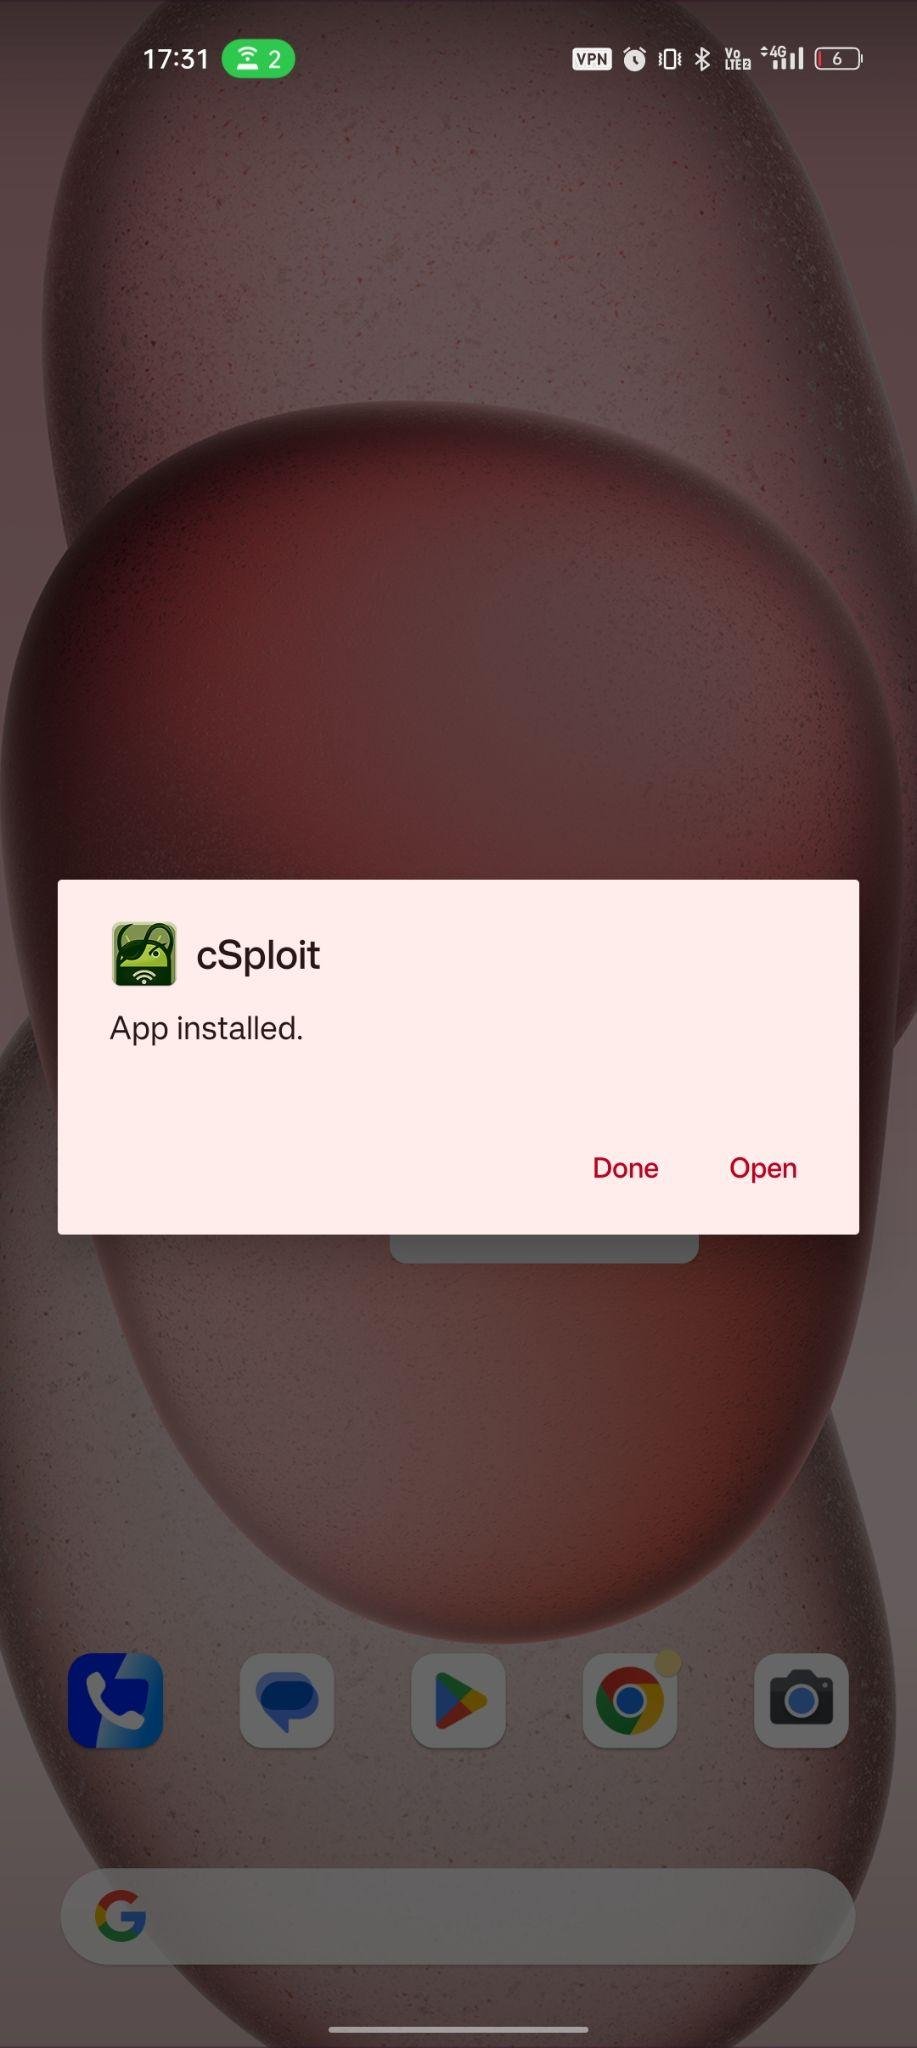 cSploit apk installed